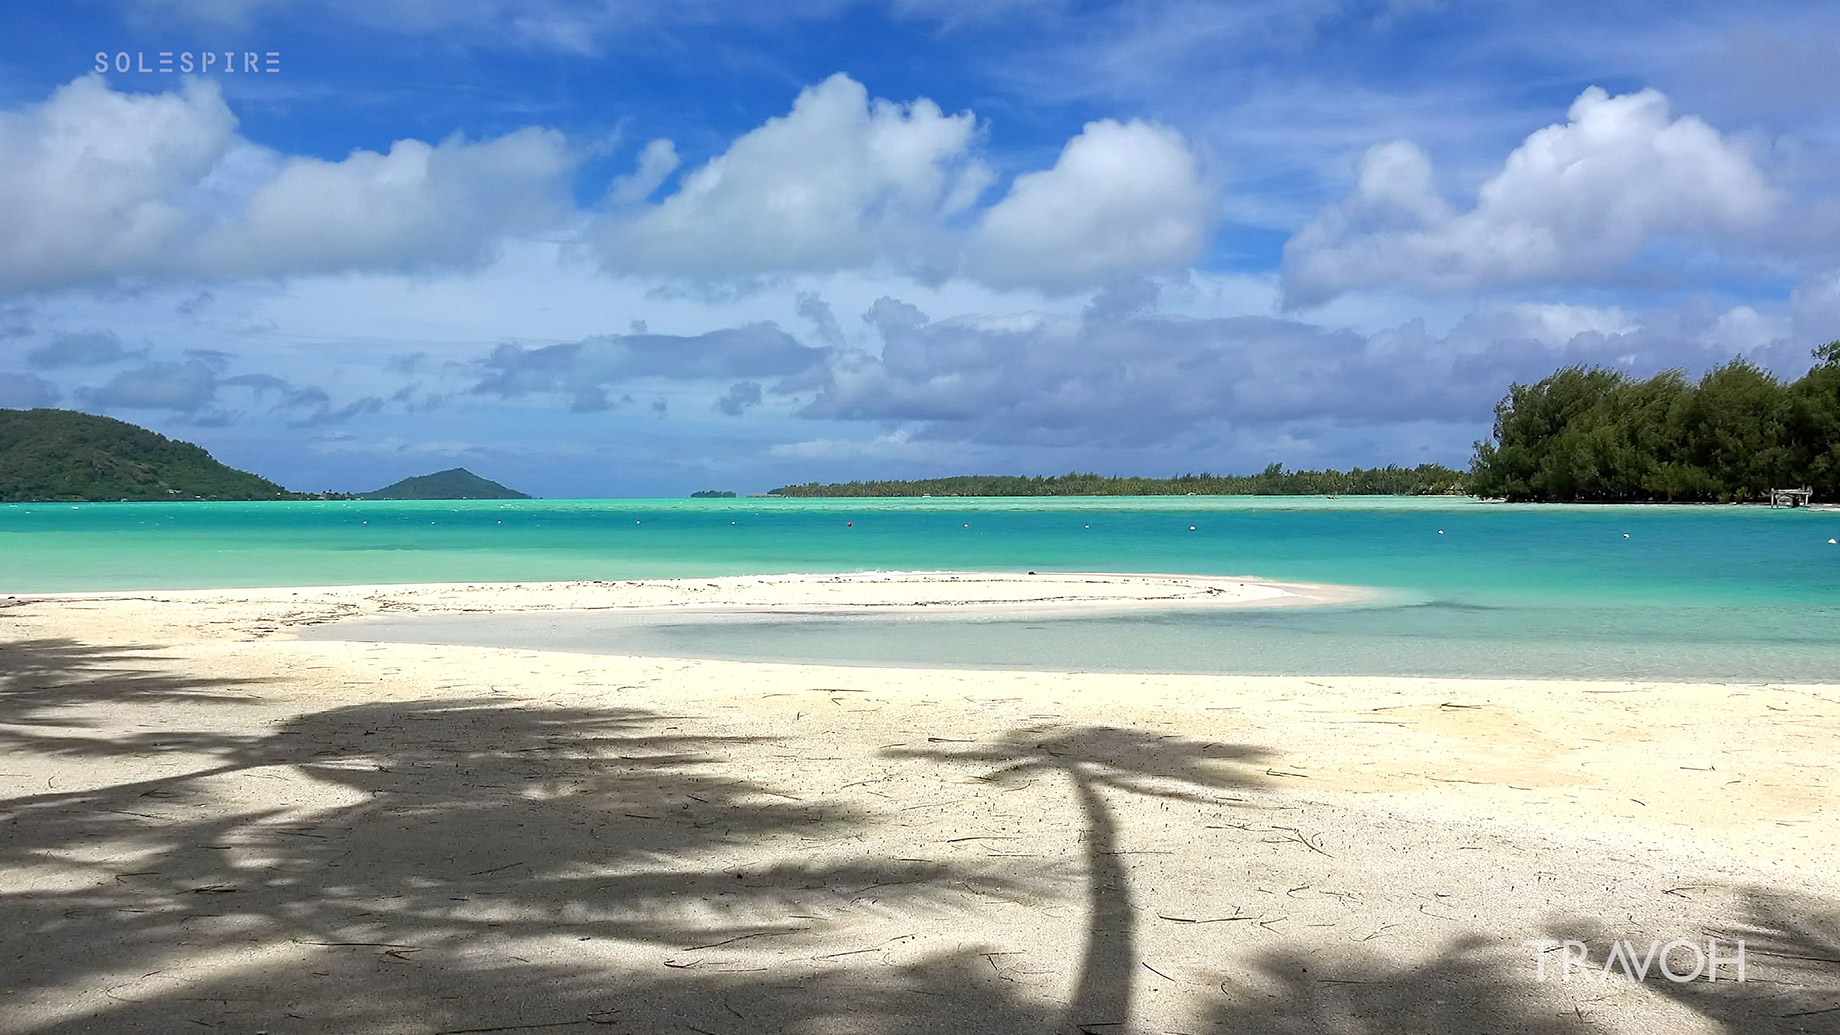 Relaxing Beach Sounds, Natural Ocean Waves - Motu Tane, Bora Bora, French Polynesia - 4K Travel Video